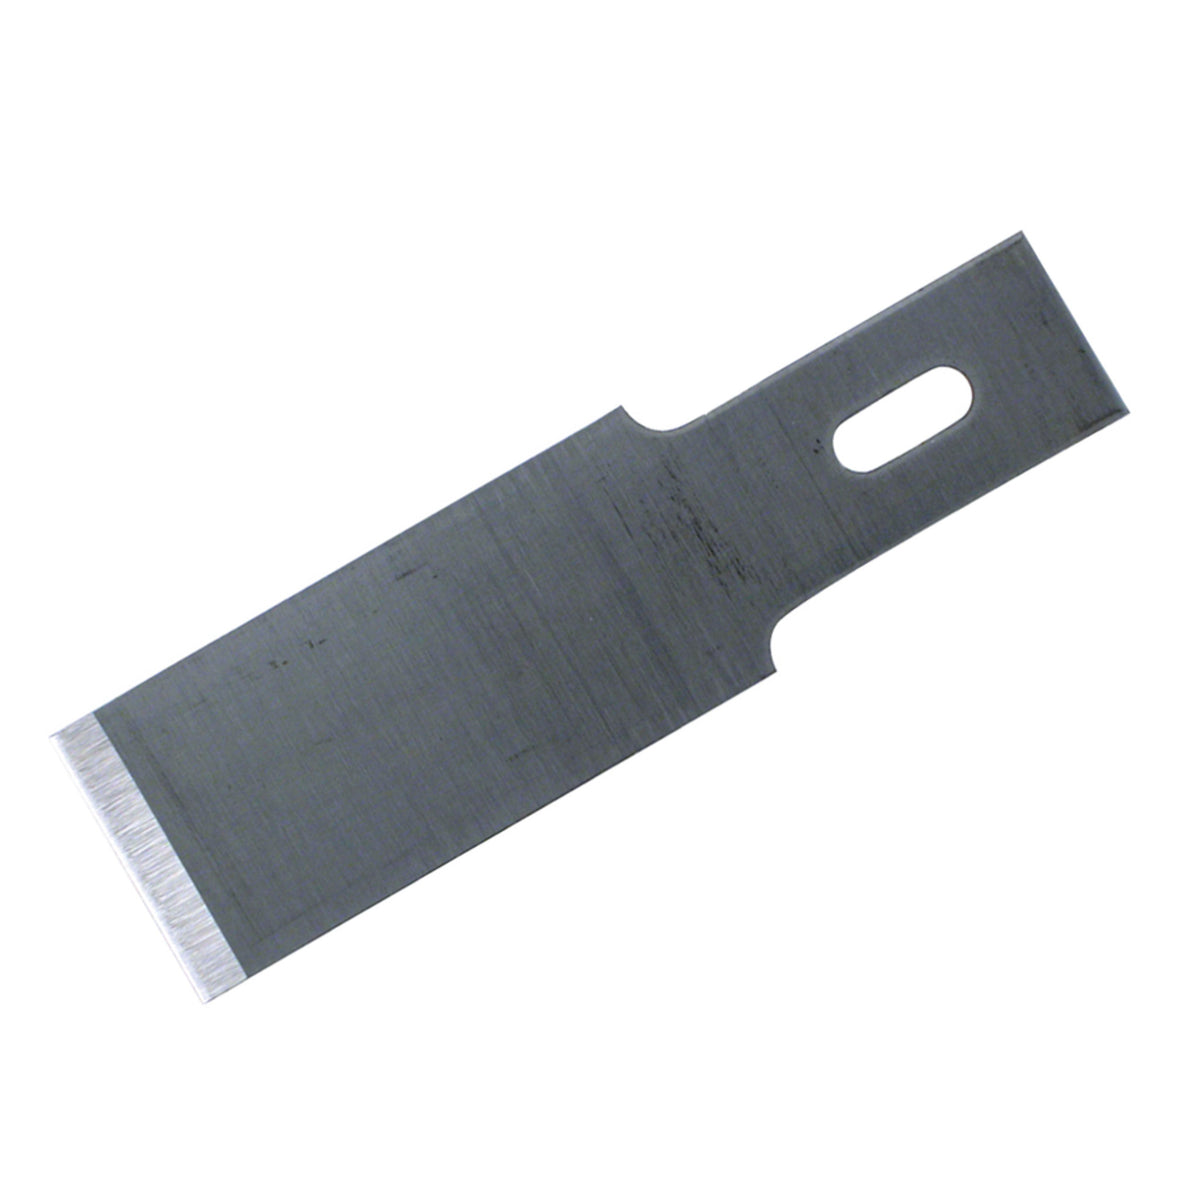 Wiha 43092 Blades for Universal Scraper Handle #18 - 10 Pack